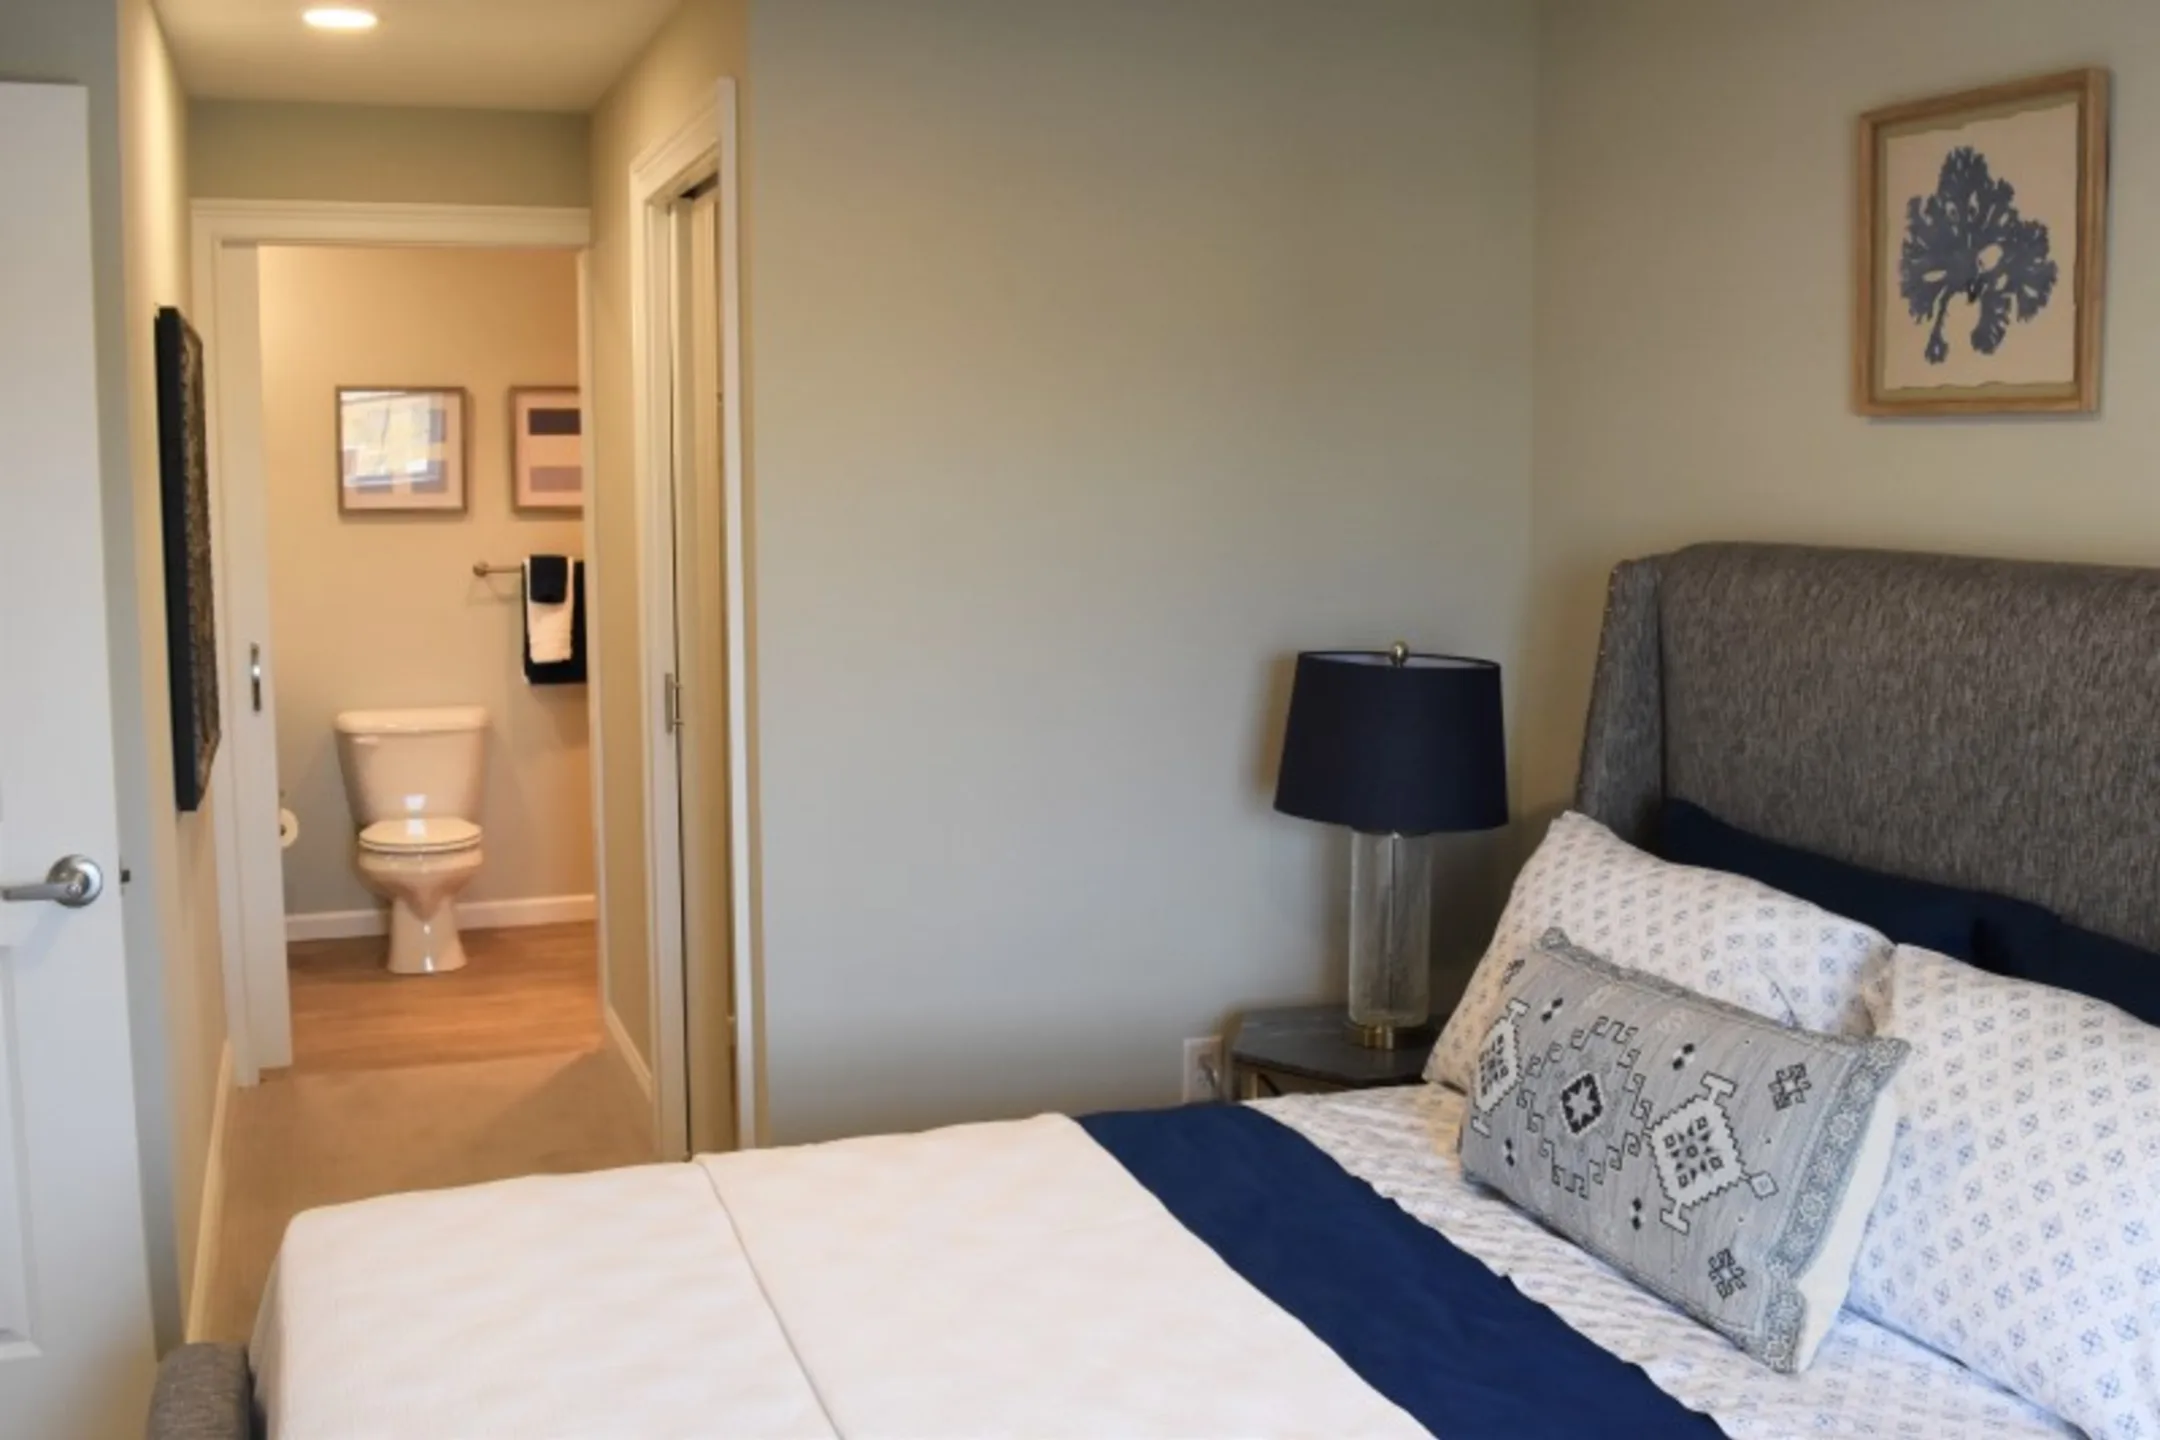 Bedroom - North Cornwall Commons Apartments - Lebanon, PA